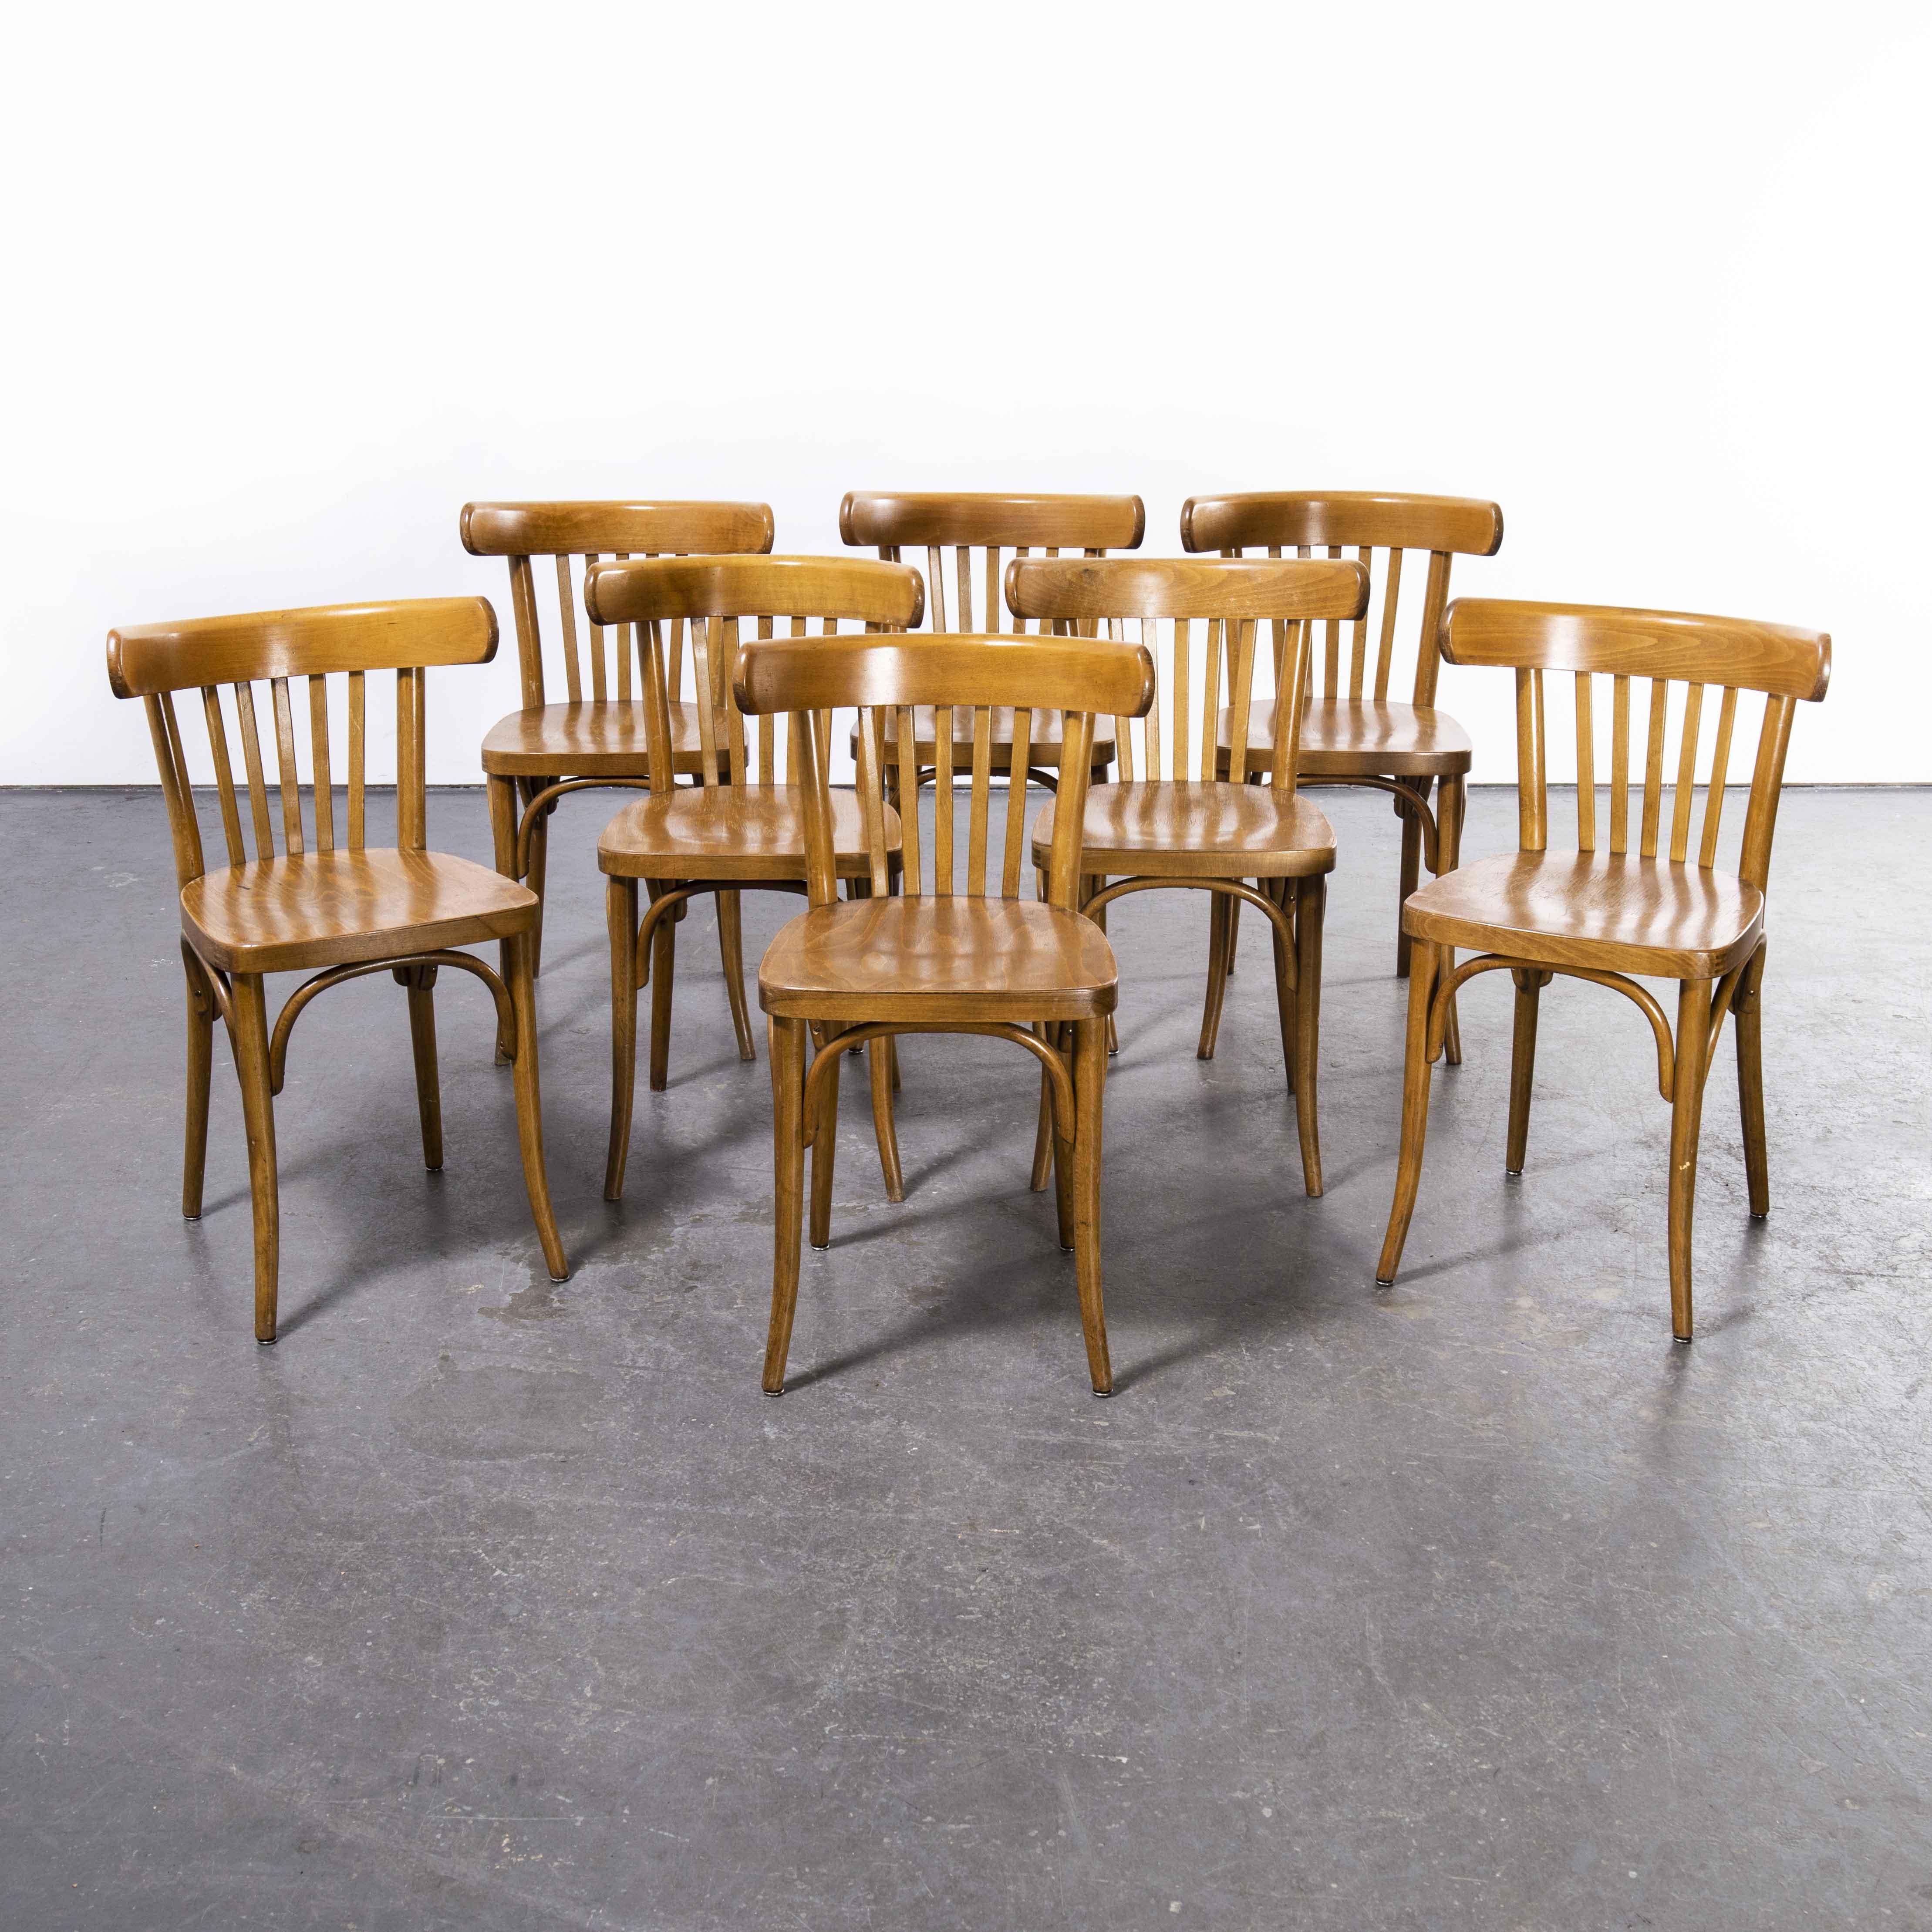 1950’s Baumann Bentwood Bistro dining chair – Set of eight (Model 1362)

1940’s Baumann Bentwood Bistro dining chair – Set of eight. Classic Beech bistro chair made in France by the maker Baumann. Baumann is a slightly off the radar French